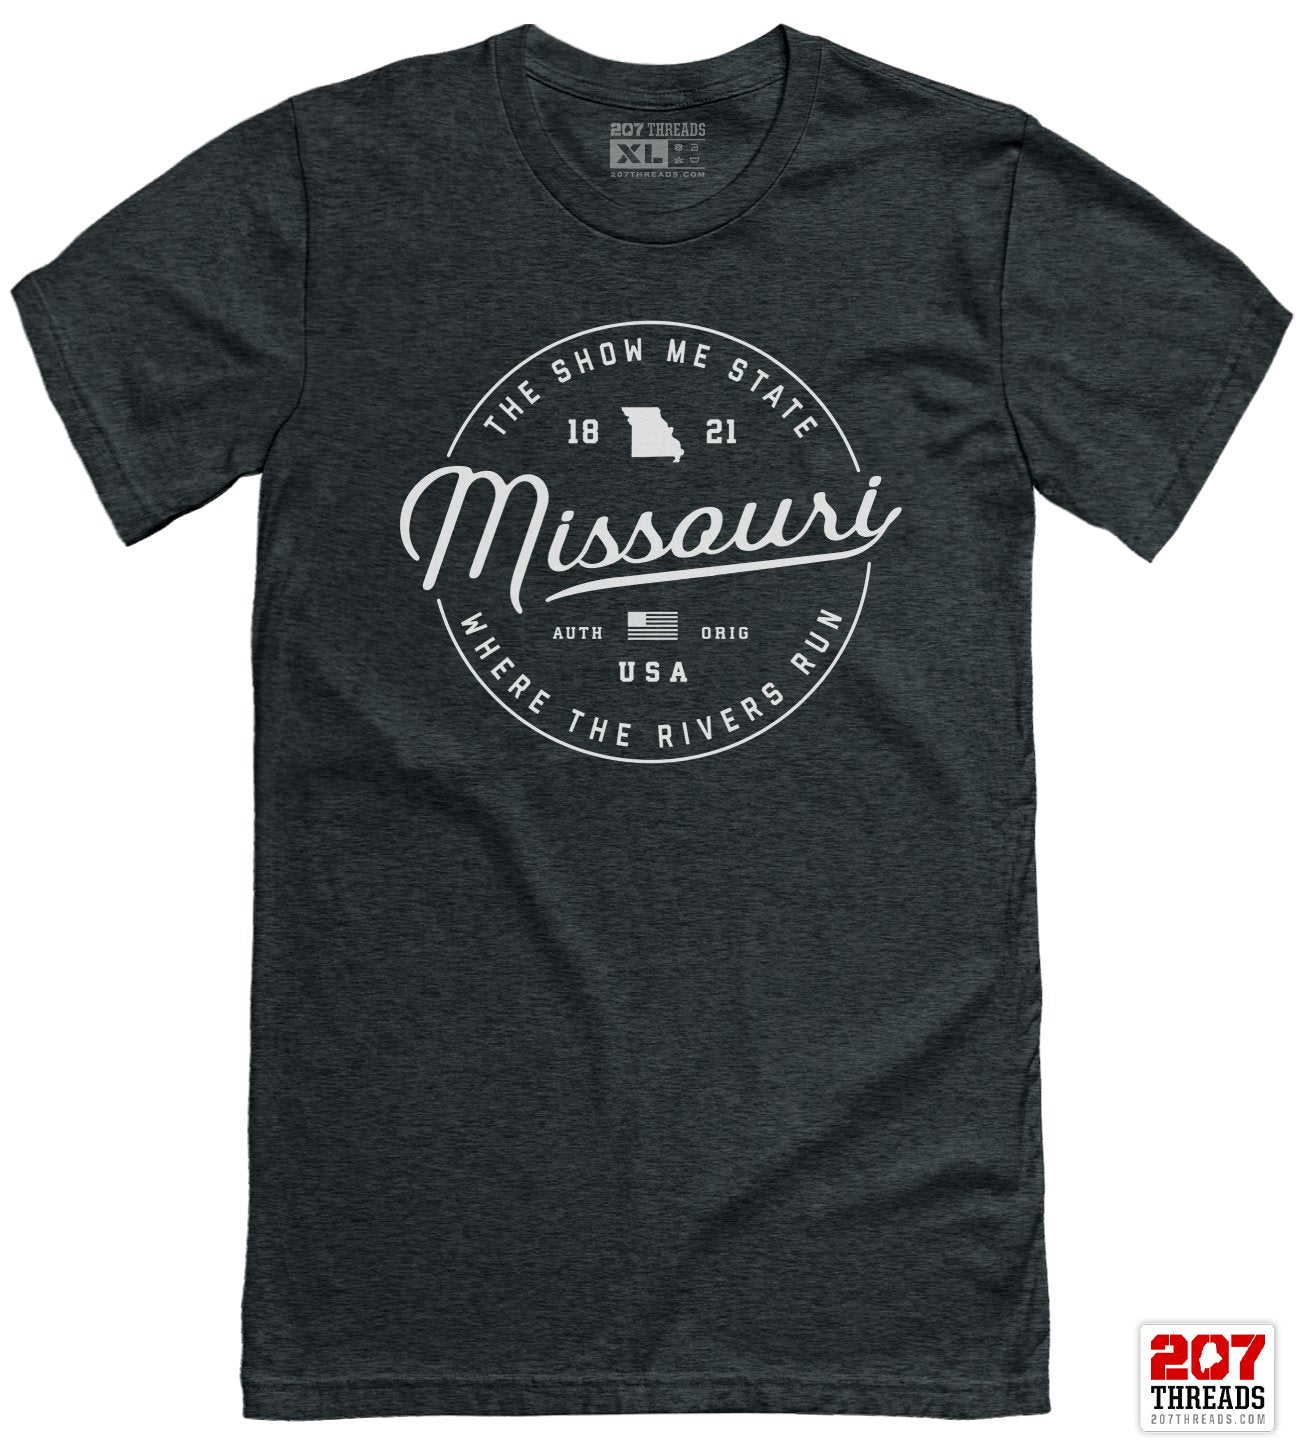 State of Missouri T-Shirt - Soft Missouri Tee